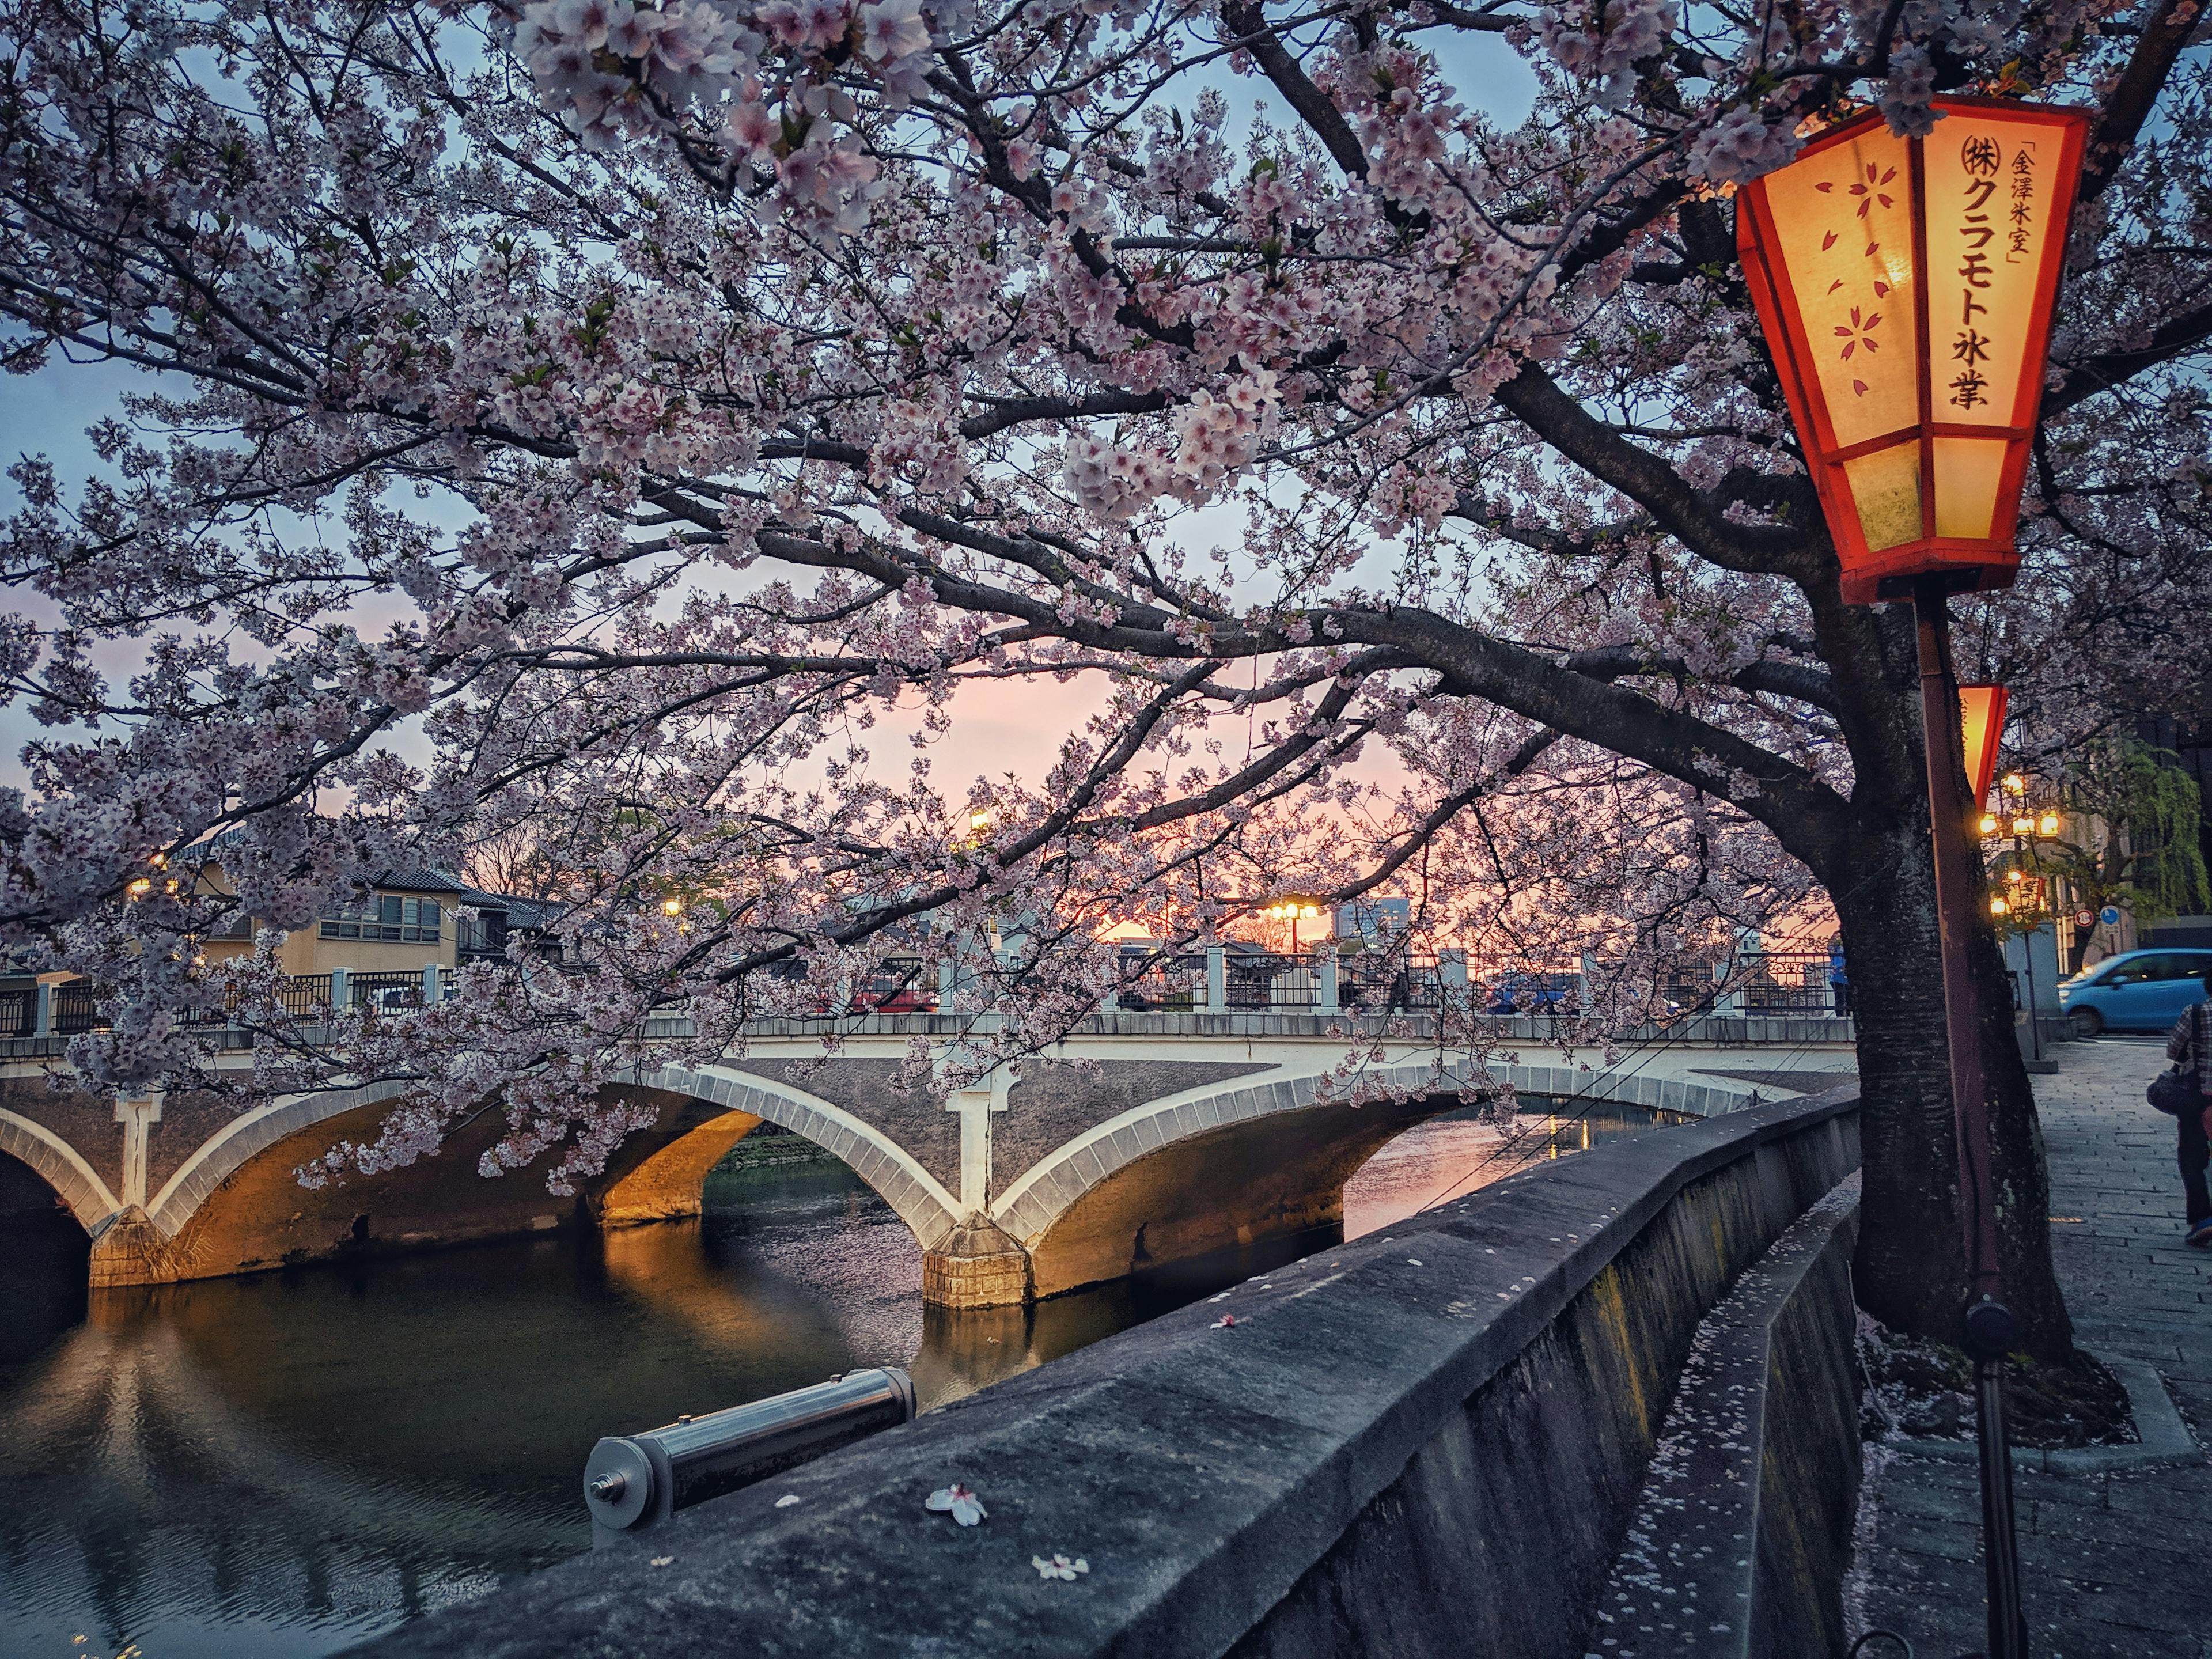 A flowering cherry blossom tree at dusk in Kanazawa, Japan